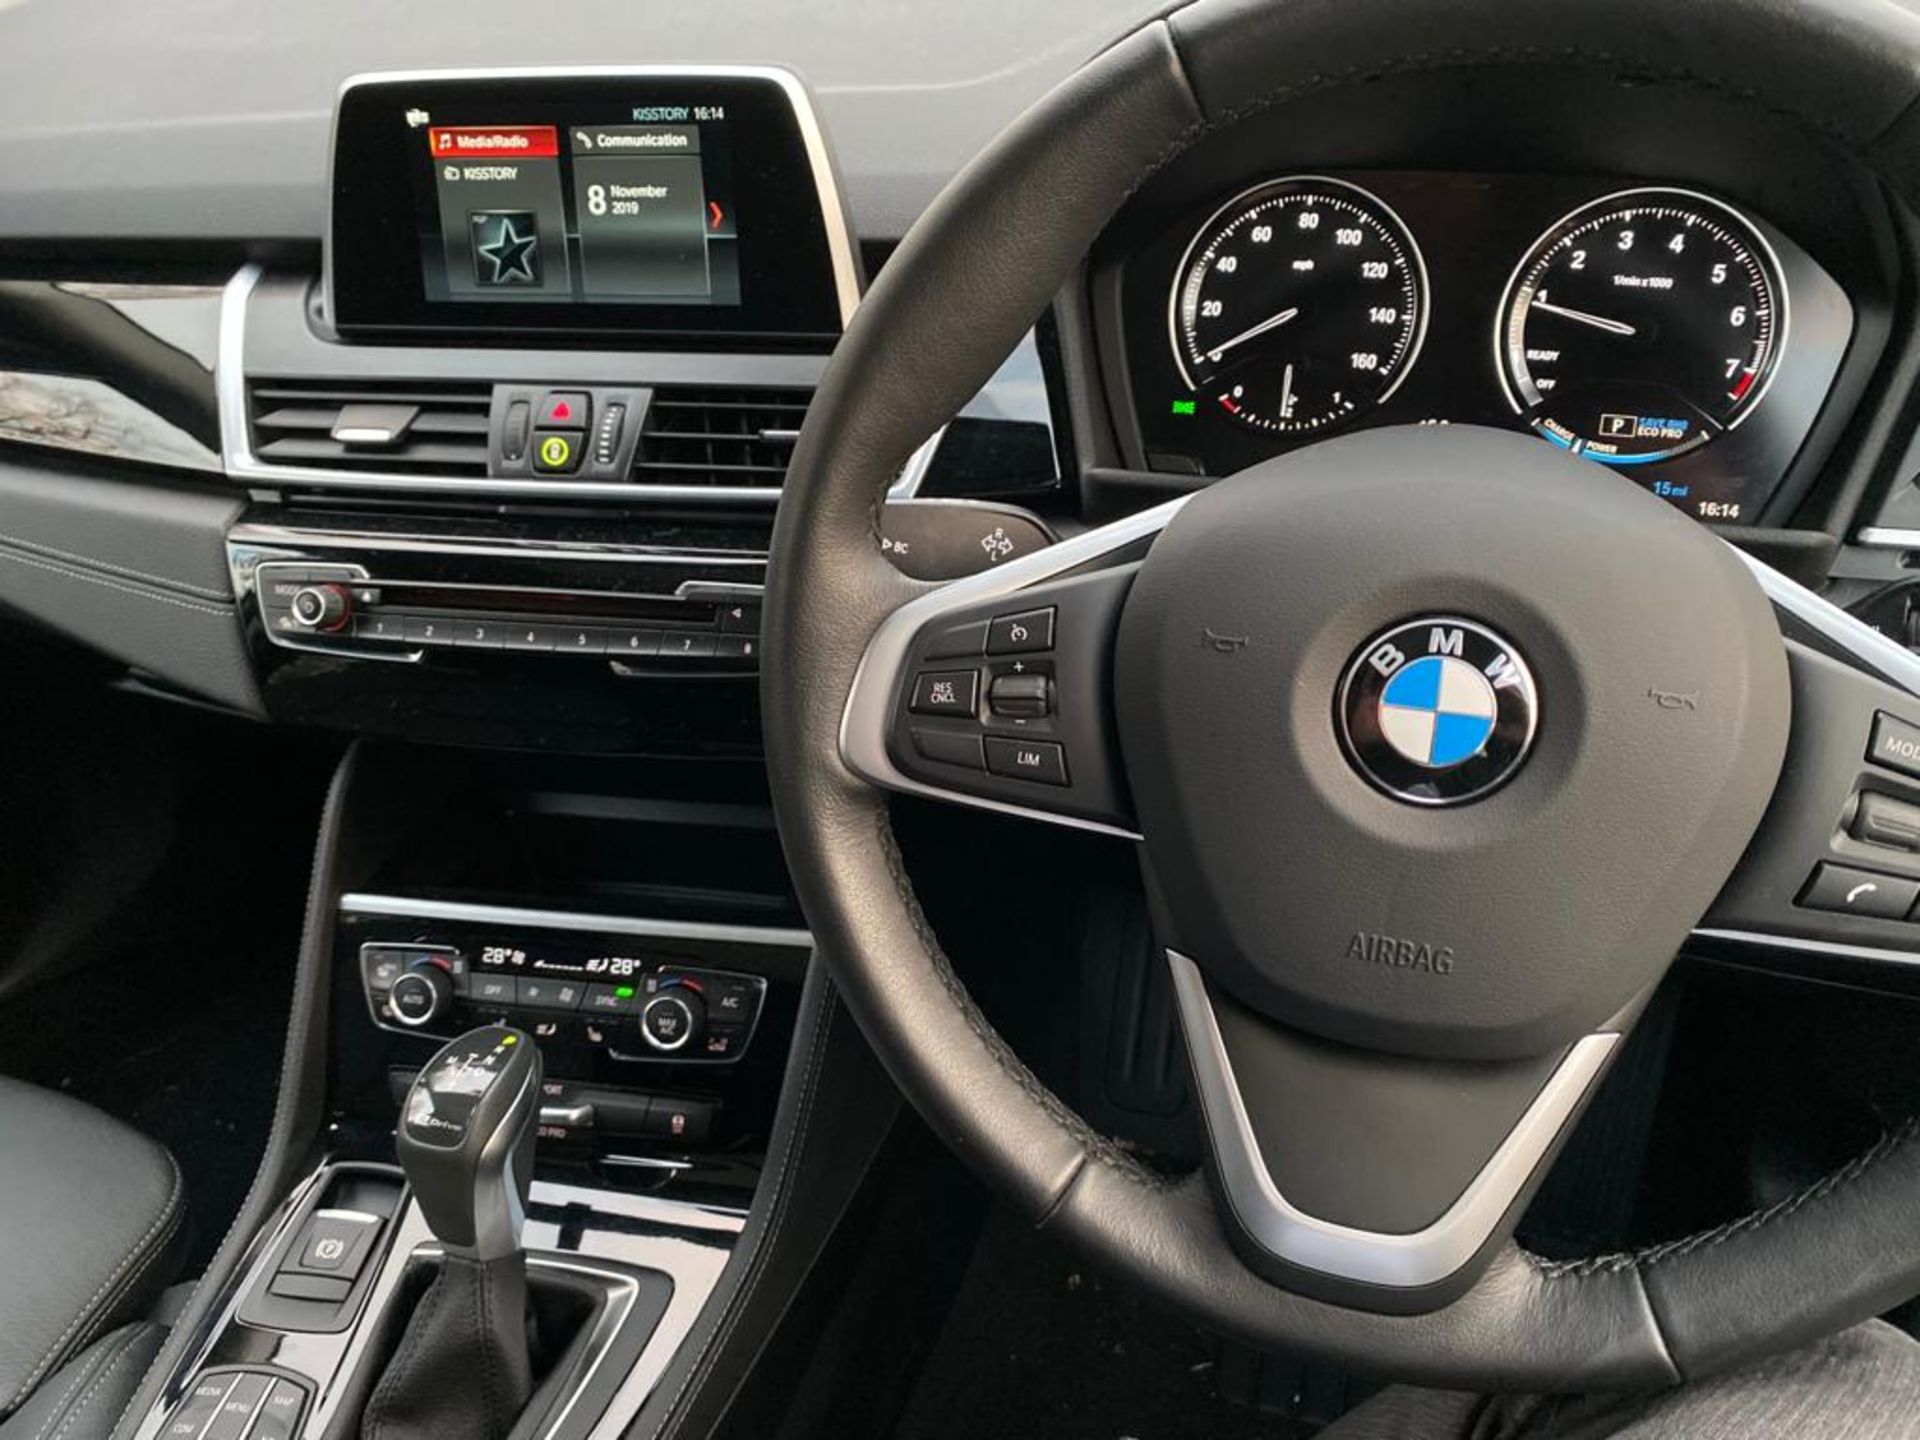 2019/68 REG BMW 225XE SPORT PREMIUM AUTOMATIC 1.5 HYBRID ELECTRIC SILVER 5 DOOR HATCHBACK *PLUS VAT* - Image 16 of 17